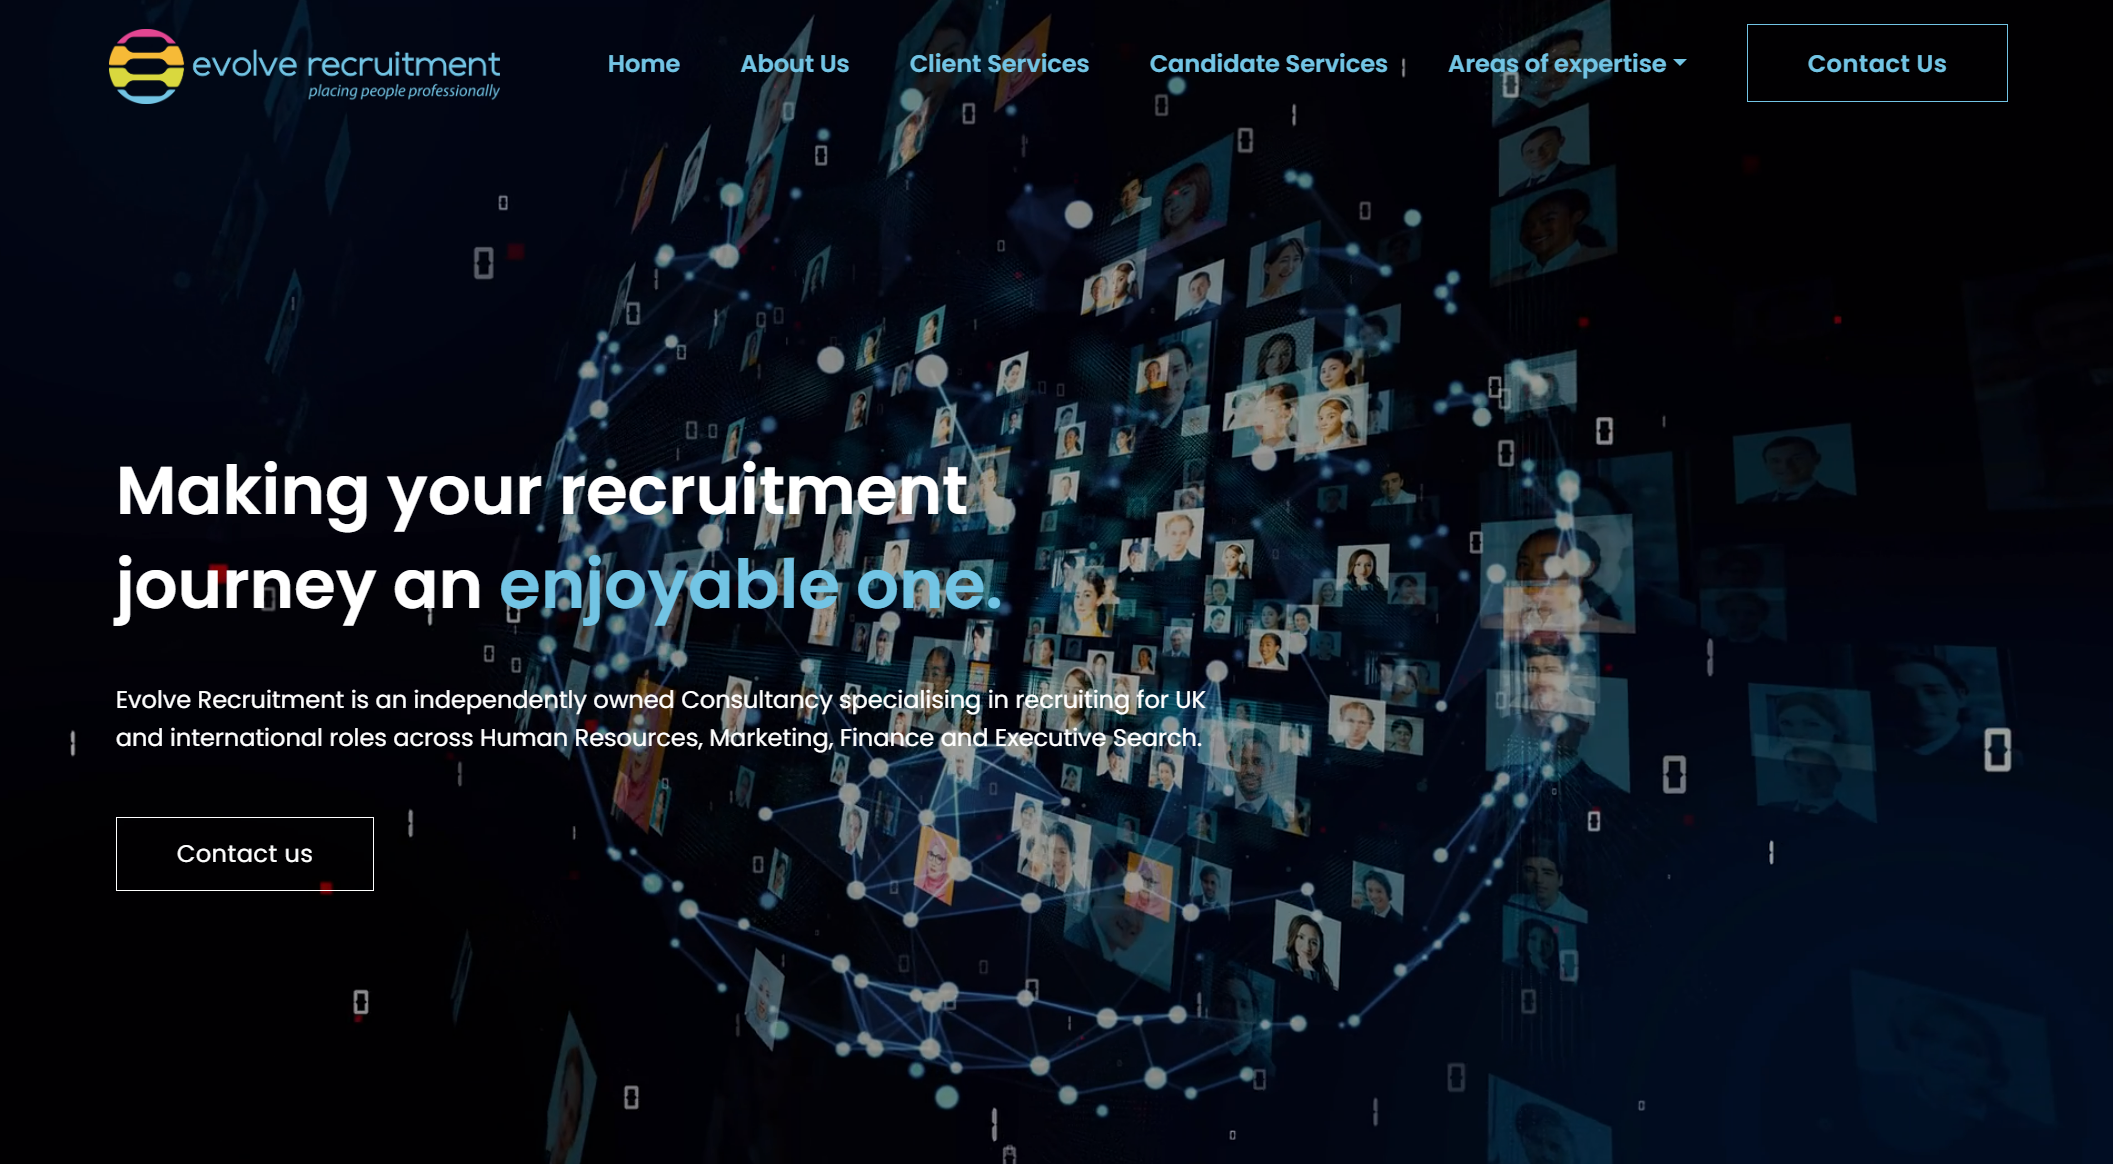 Evolve Recruitment Image